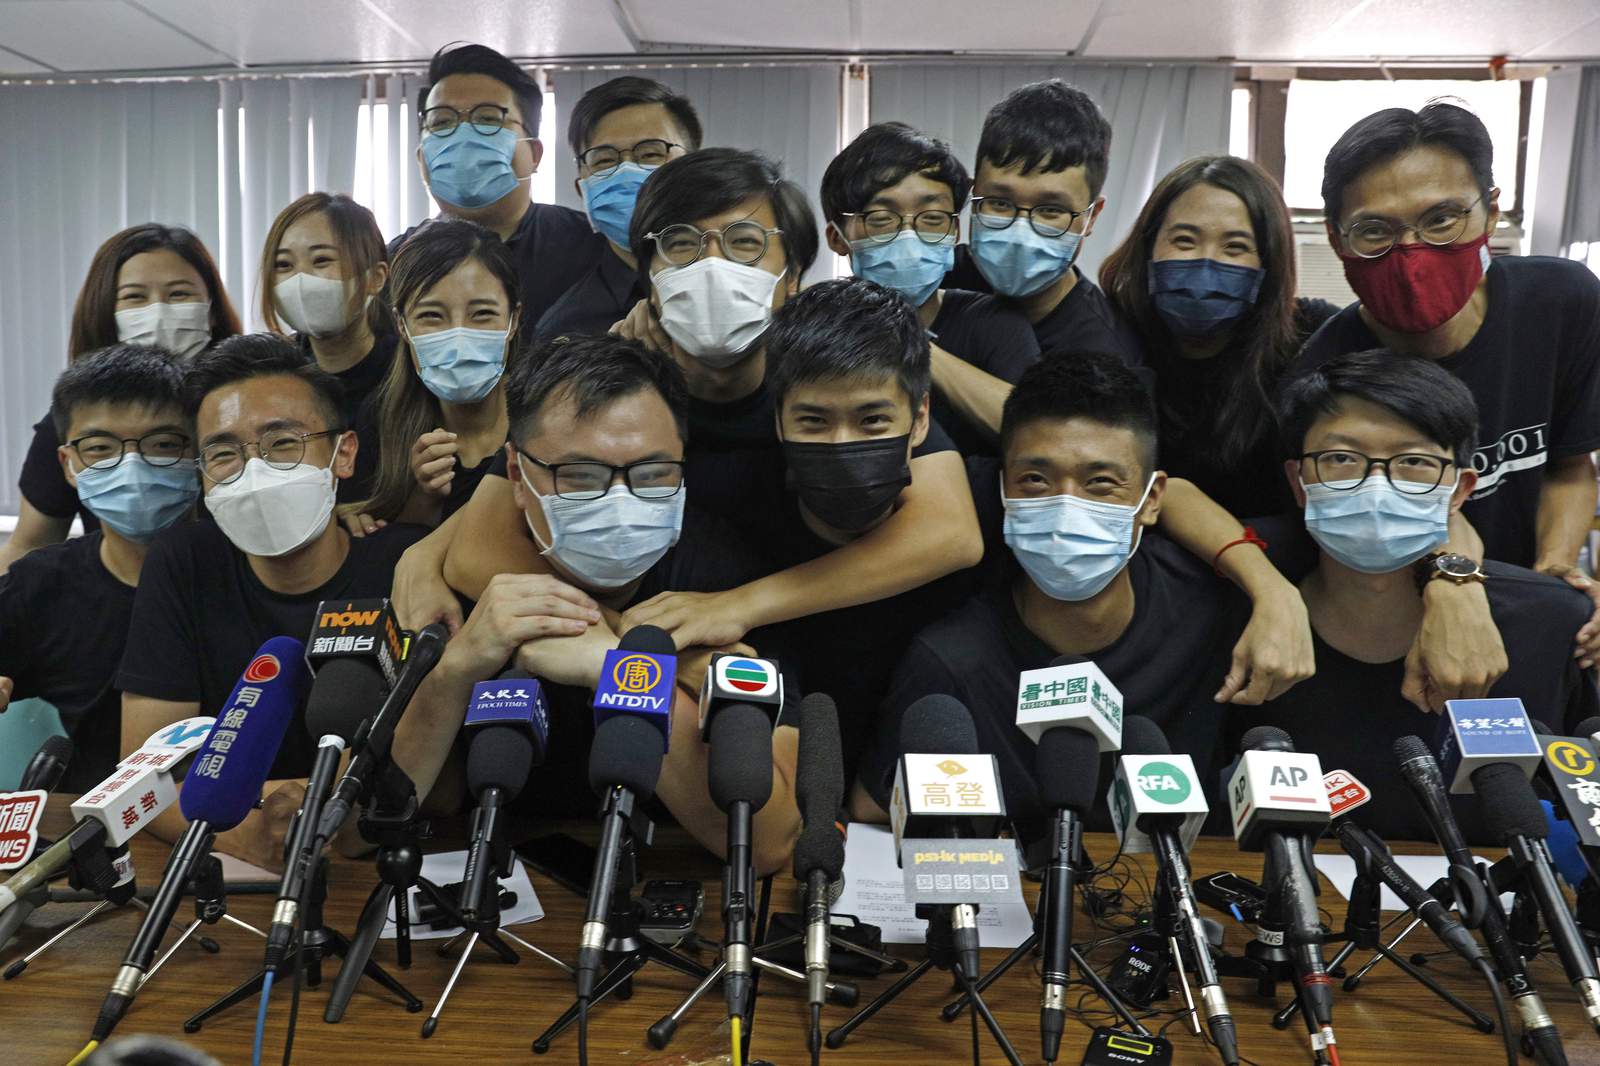 EXPLAINER: Hong Kong mass arrests chill democracy movement